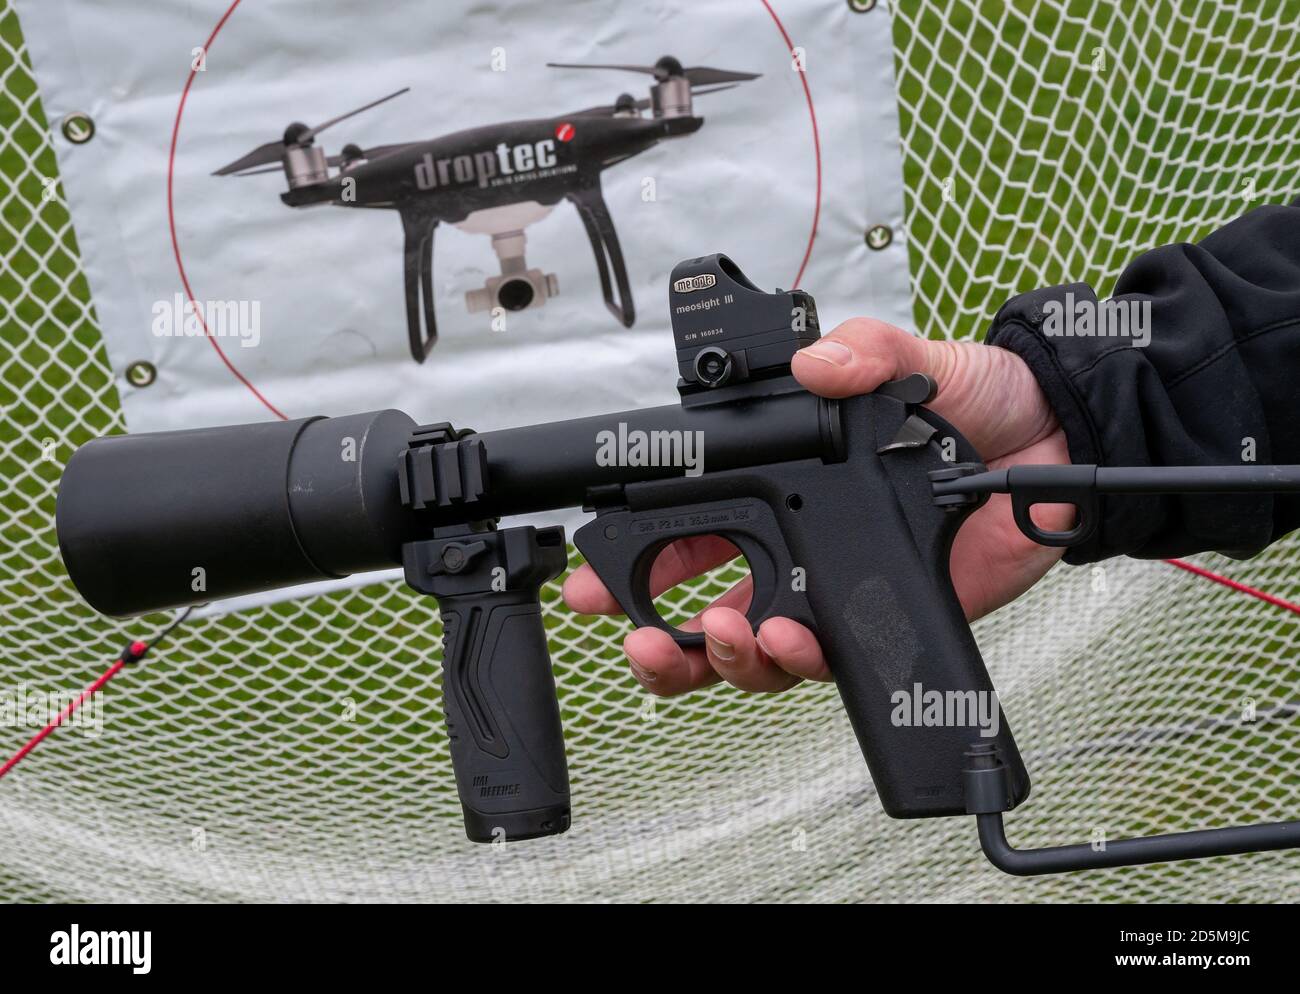 German prison tests new net gun to catch drones